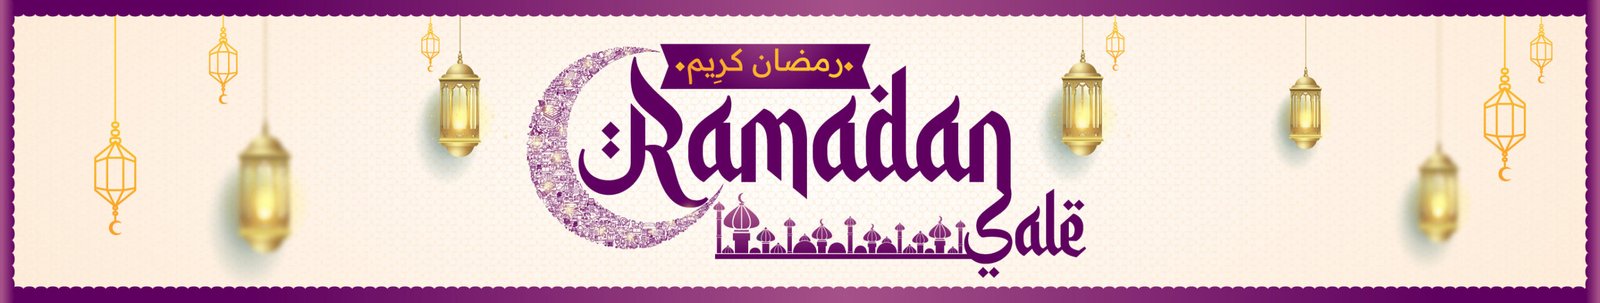 ramadan offer sales